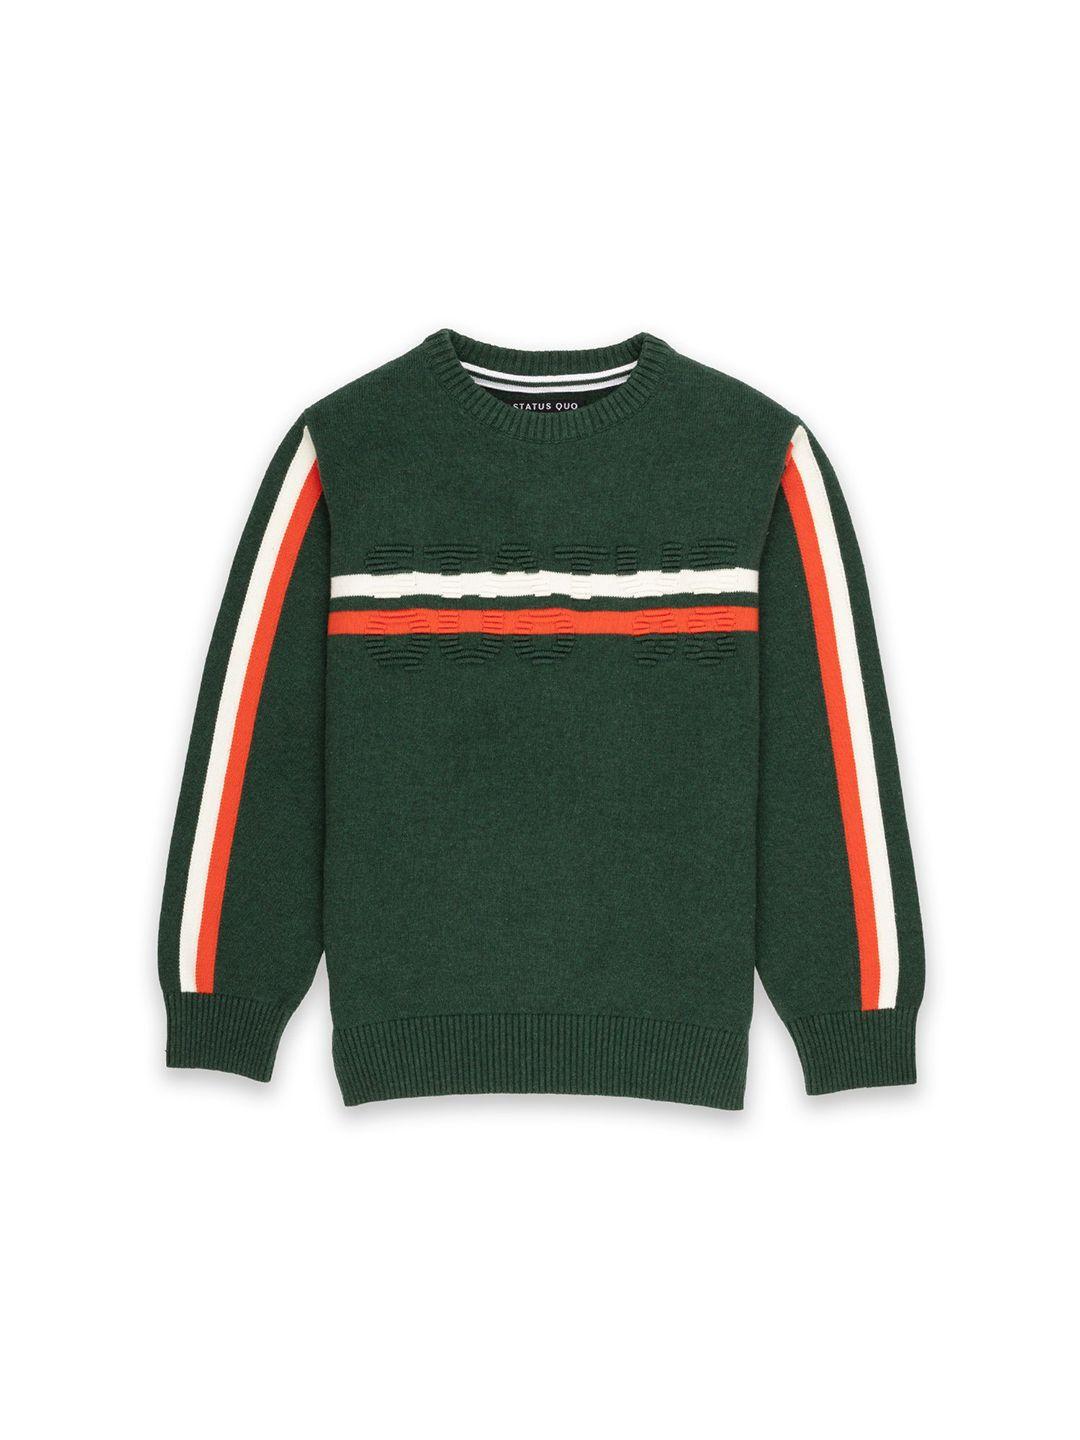 status quo boys green & orange striped pullover